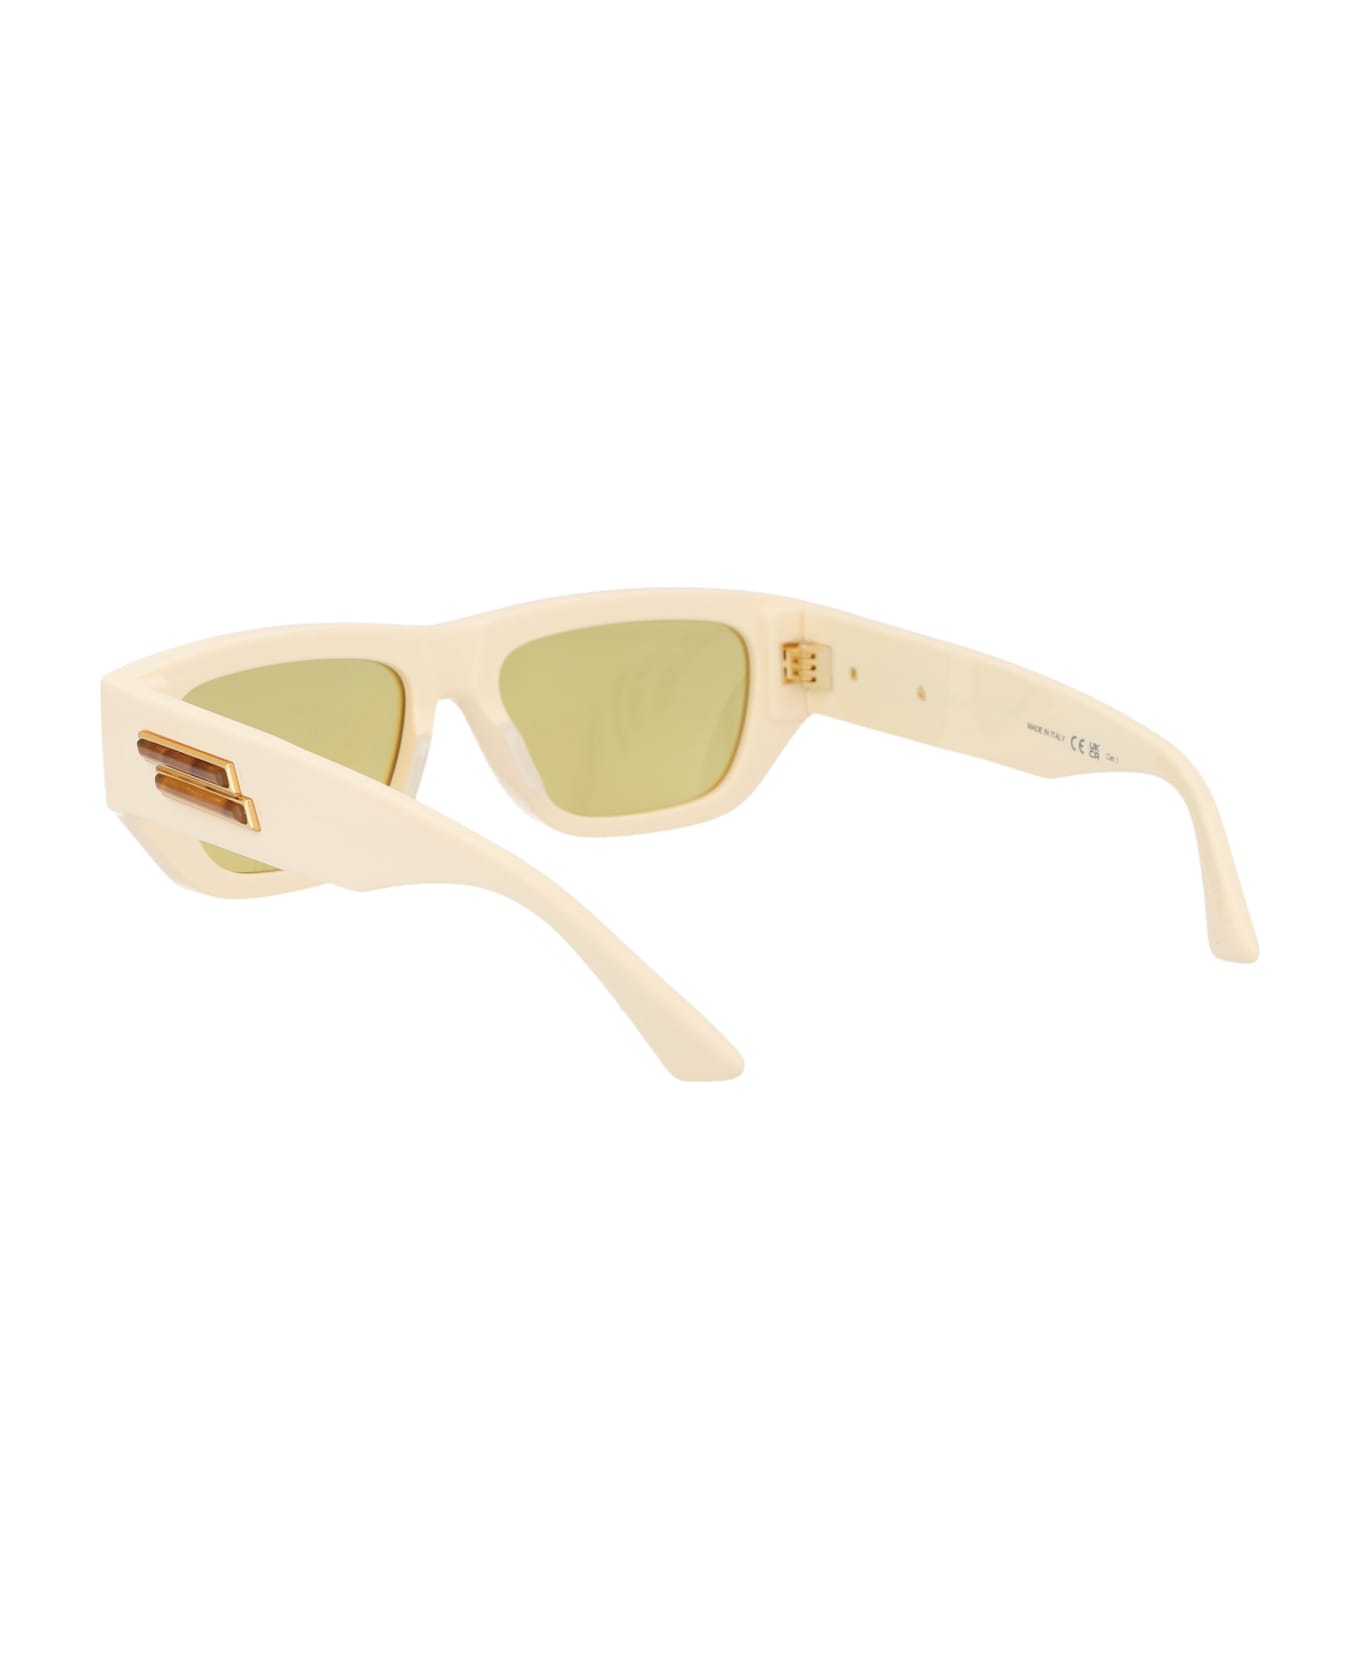 Bottega Veneta Eyewear Bv1252s Sunglasses - 003 IVORY IVORY YELLOW